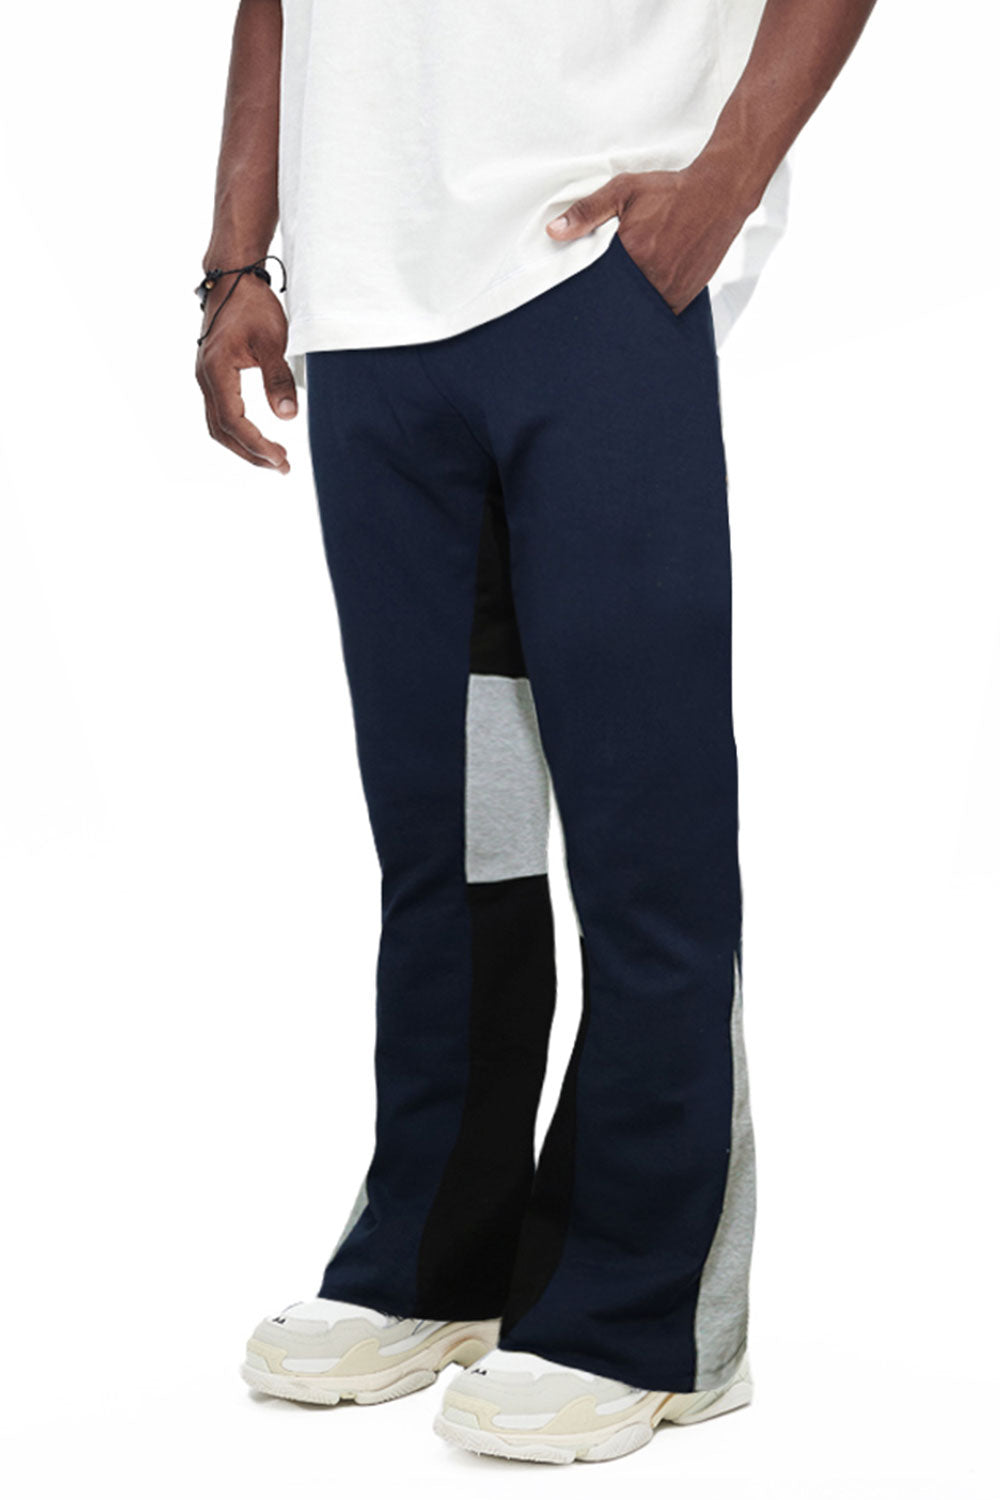 Contrast Bootcut Sweatpants - Black  Sweatpants, New t shirt design,  Street style outfits men